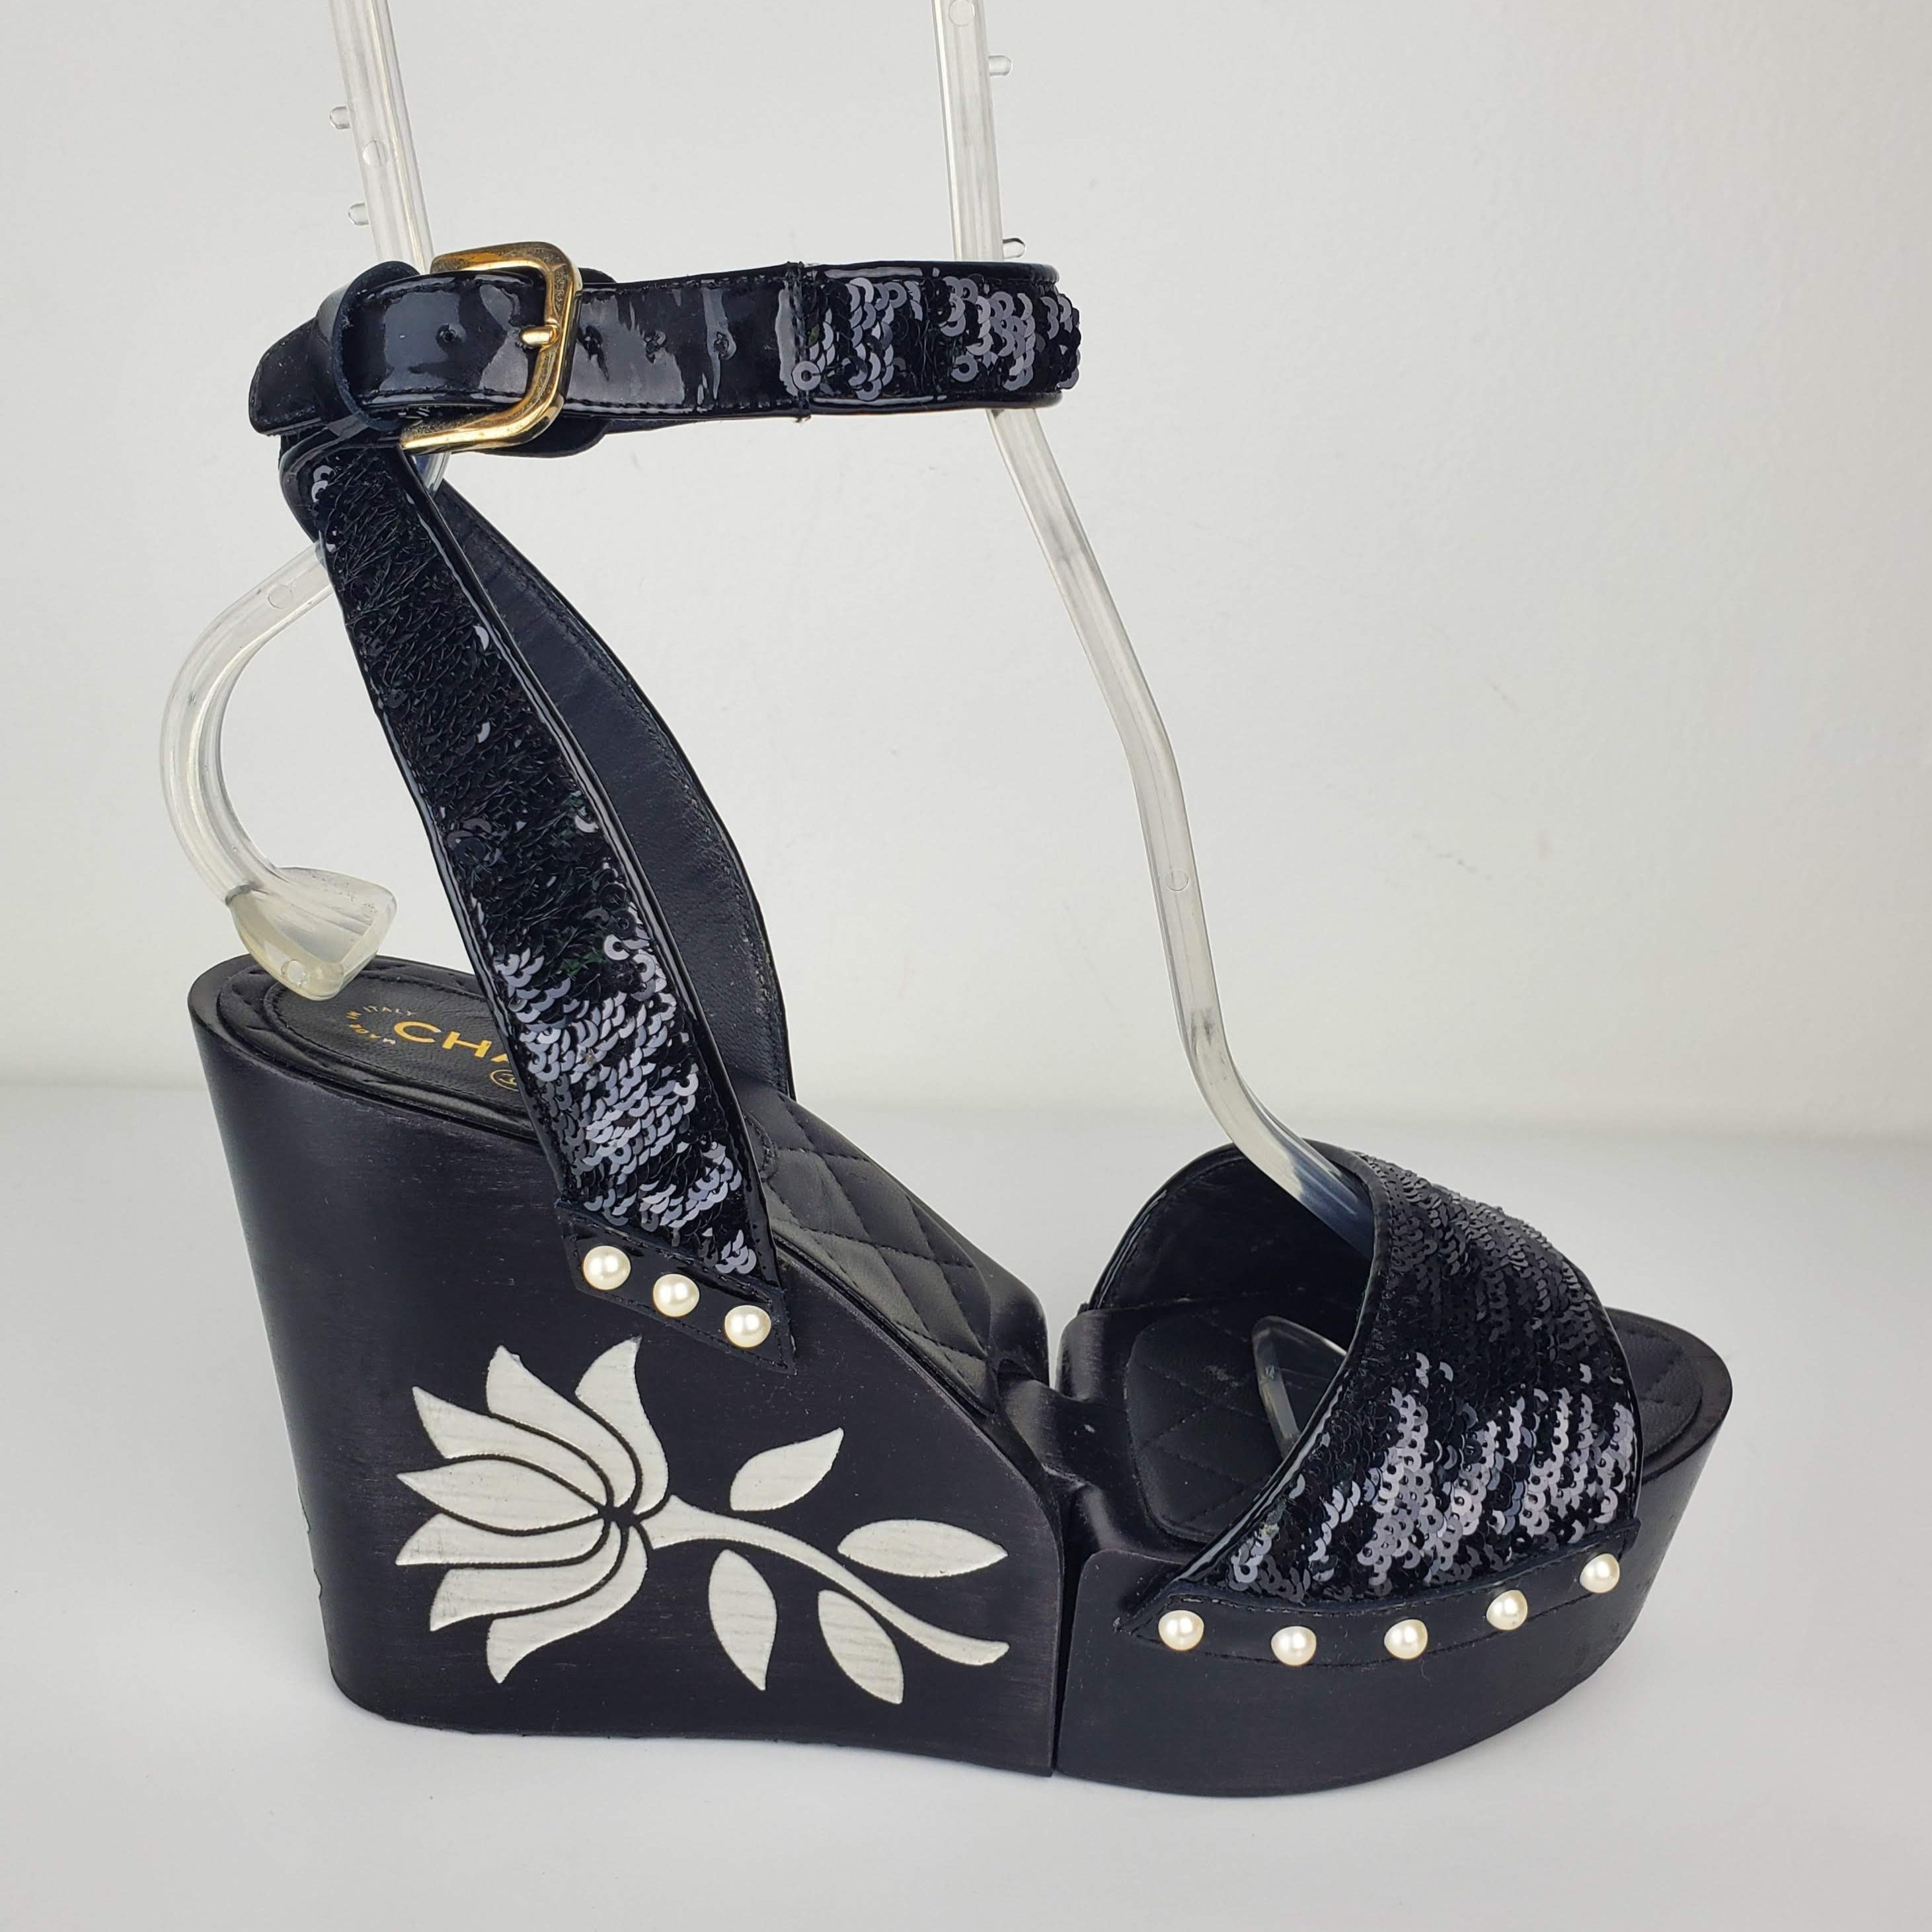 Shop CHANEL Women's Platform & Wedge Sandals